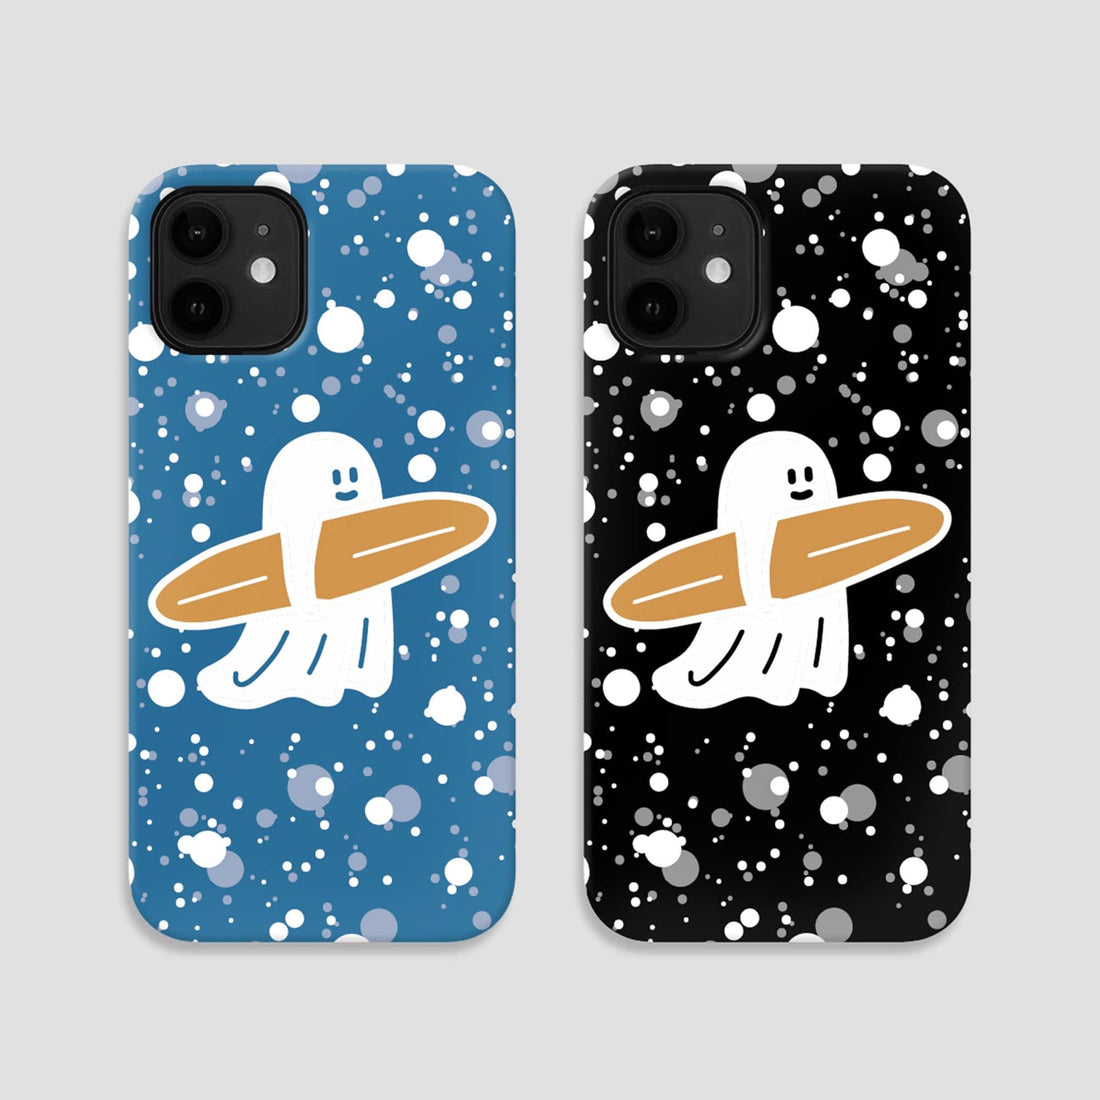 Percentage/Design p/d 幽靈大軍 Ghost Surfer Gordy & Starry Night Phone Case 手機保護殼（2款） - SOUL SIMPLE HK